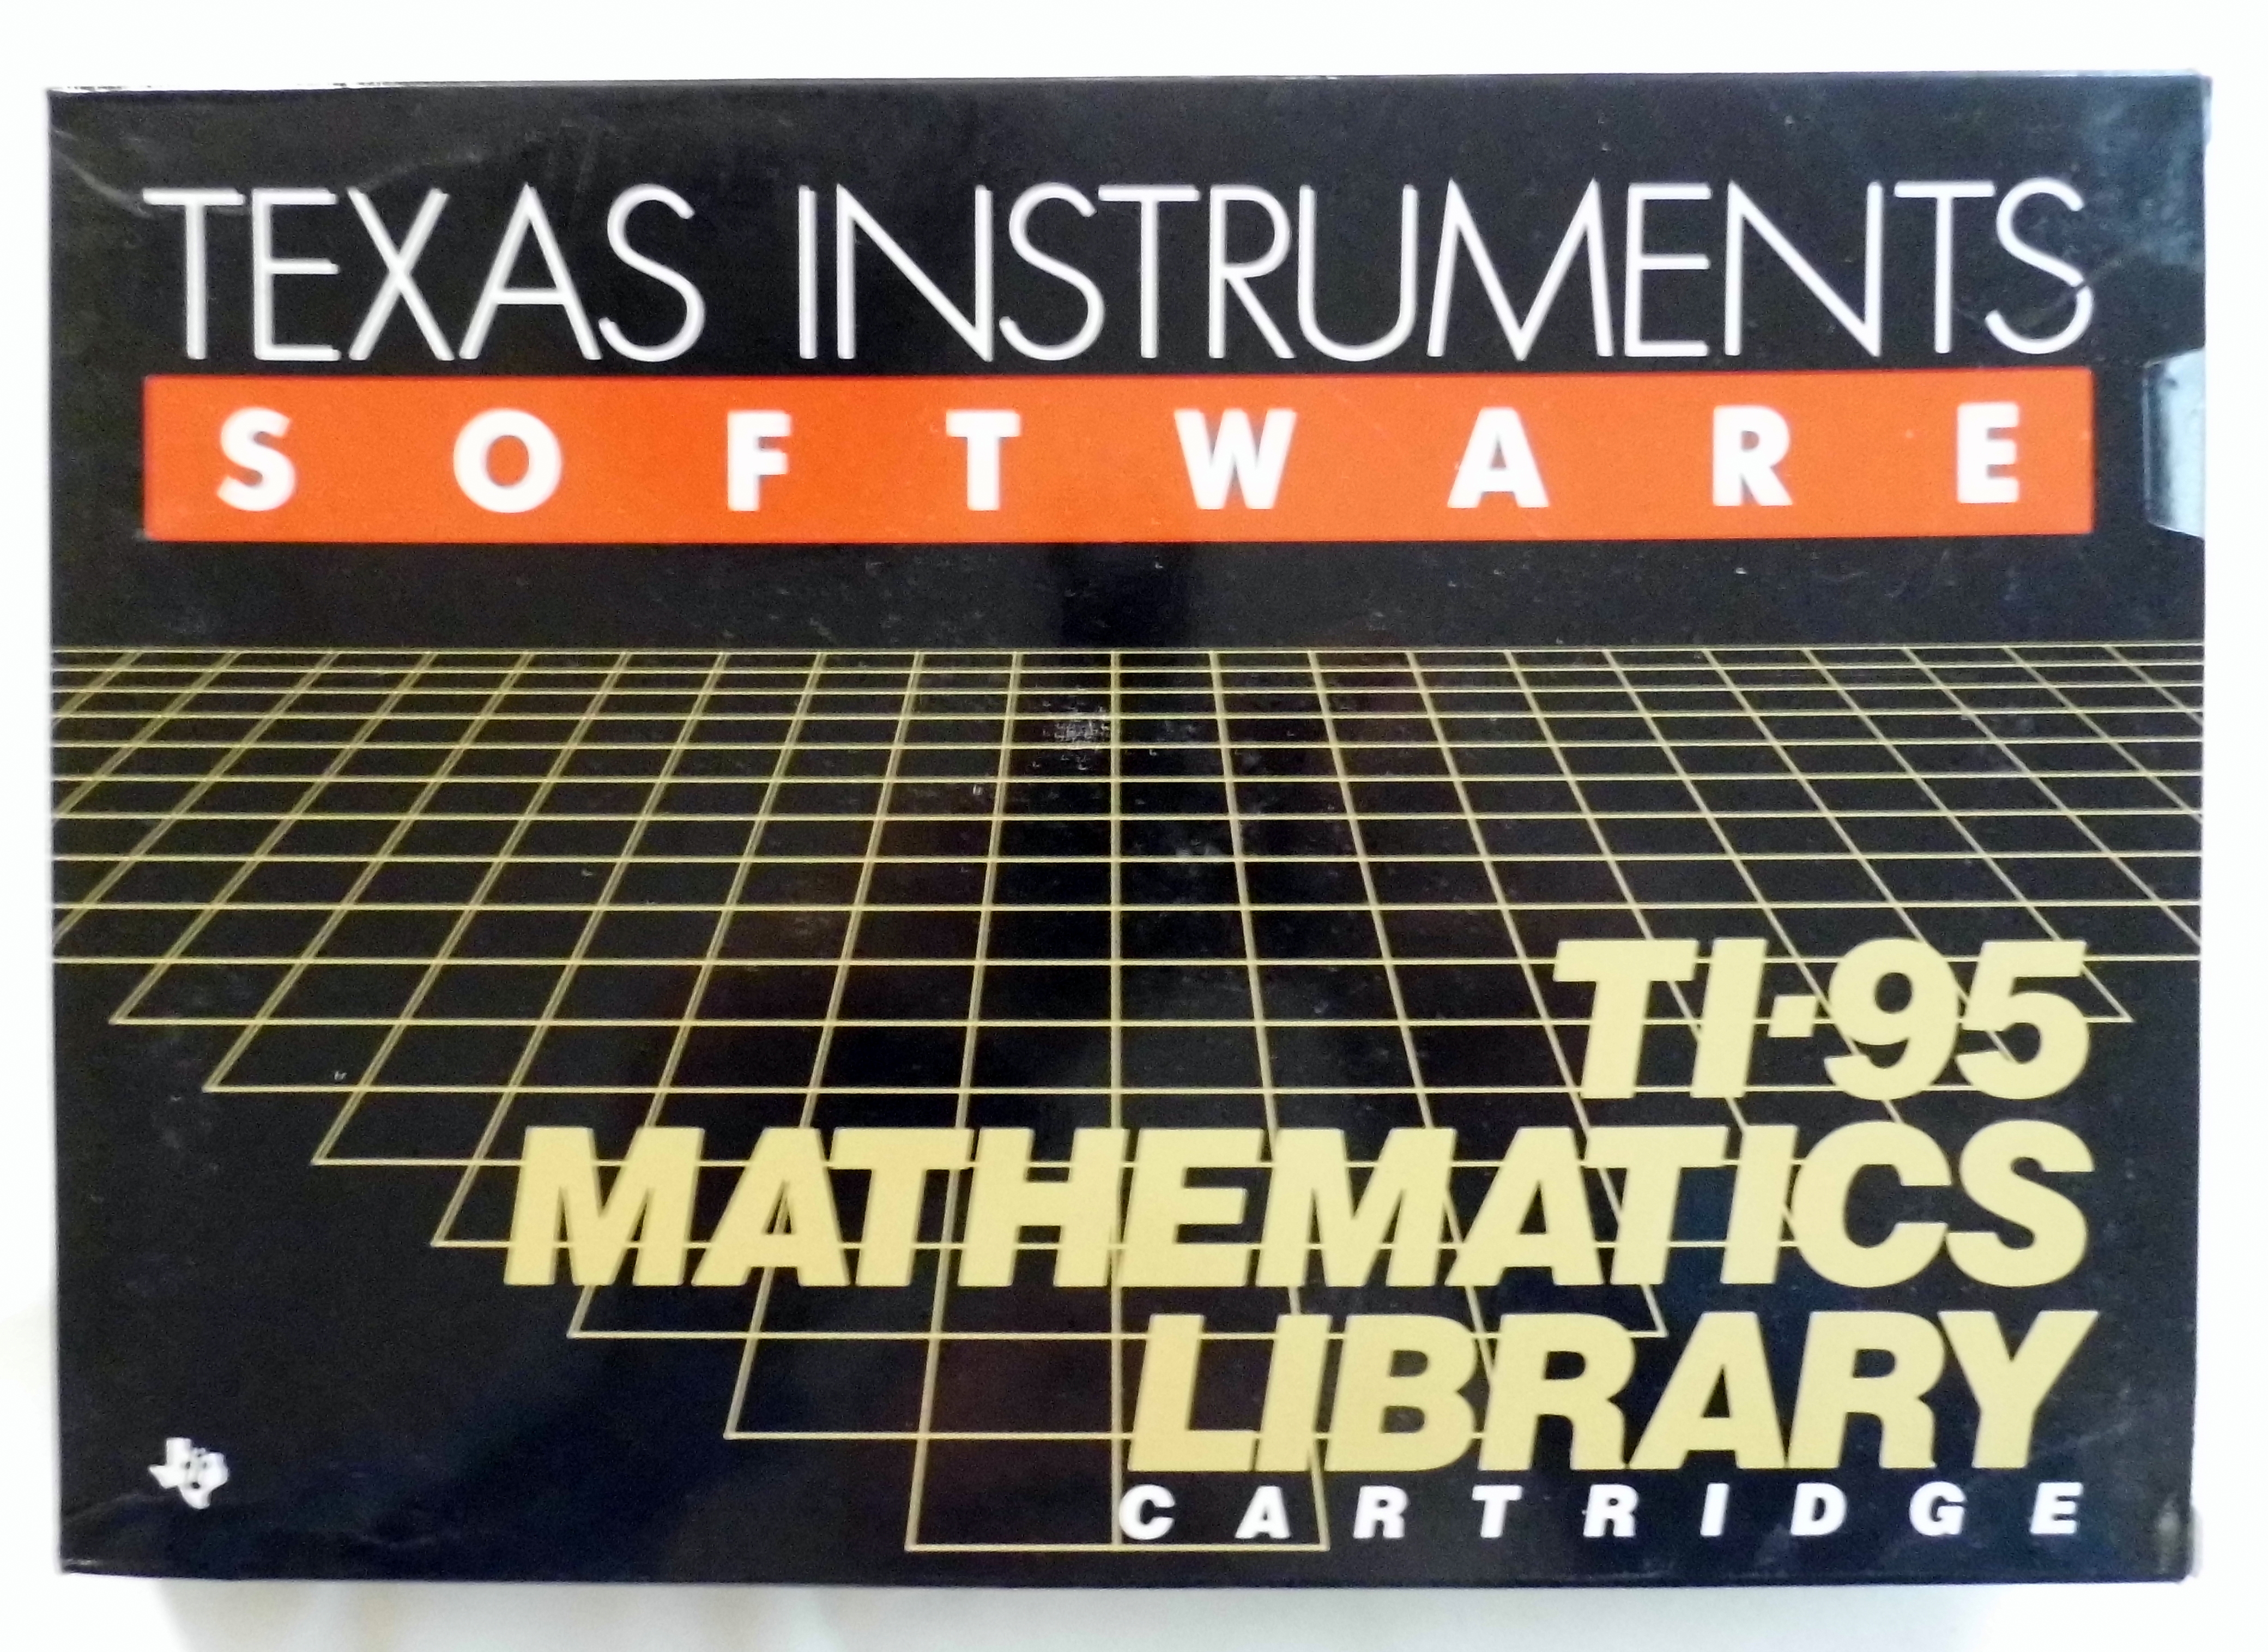 Mathematics Library Cartridge, enthält 14 Mathematikprogramme